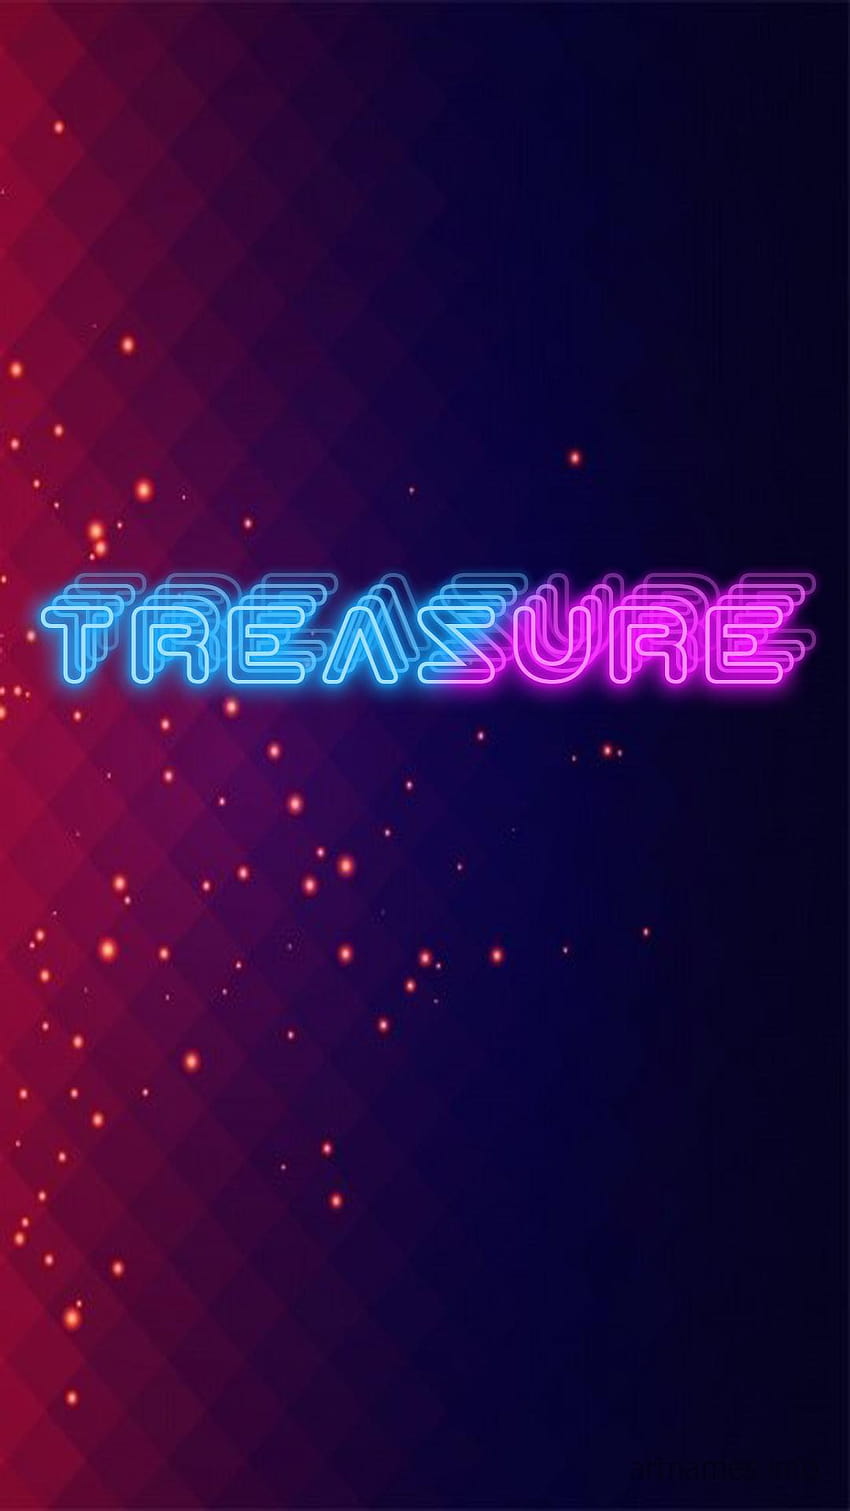 Treasure as a ART Name !, treasure logo HD phone wallpaper